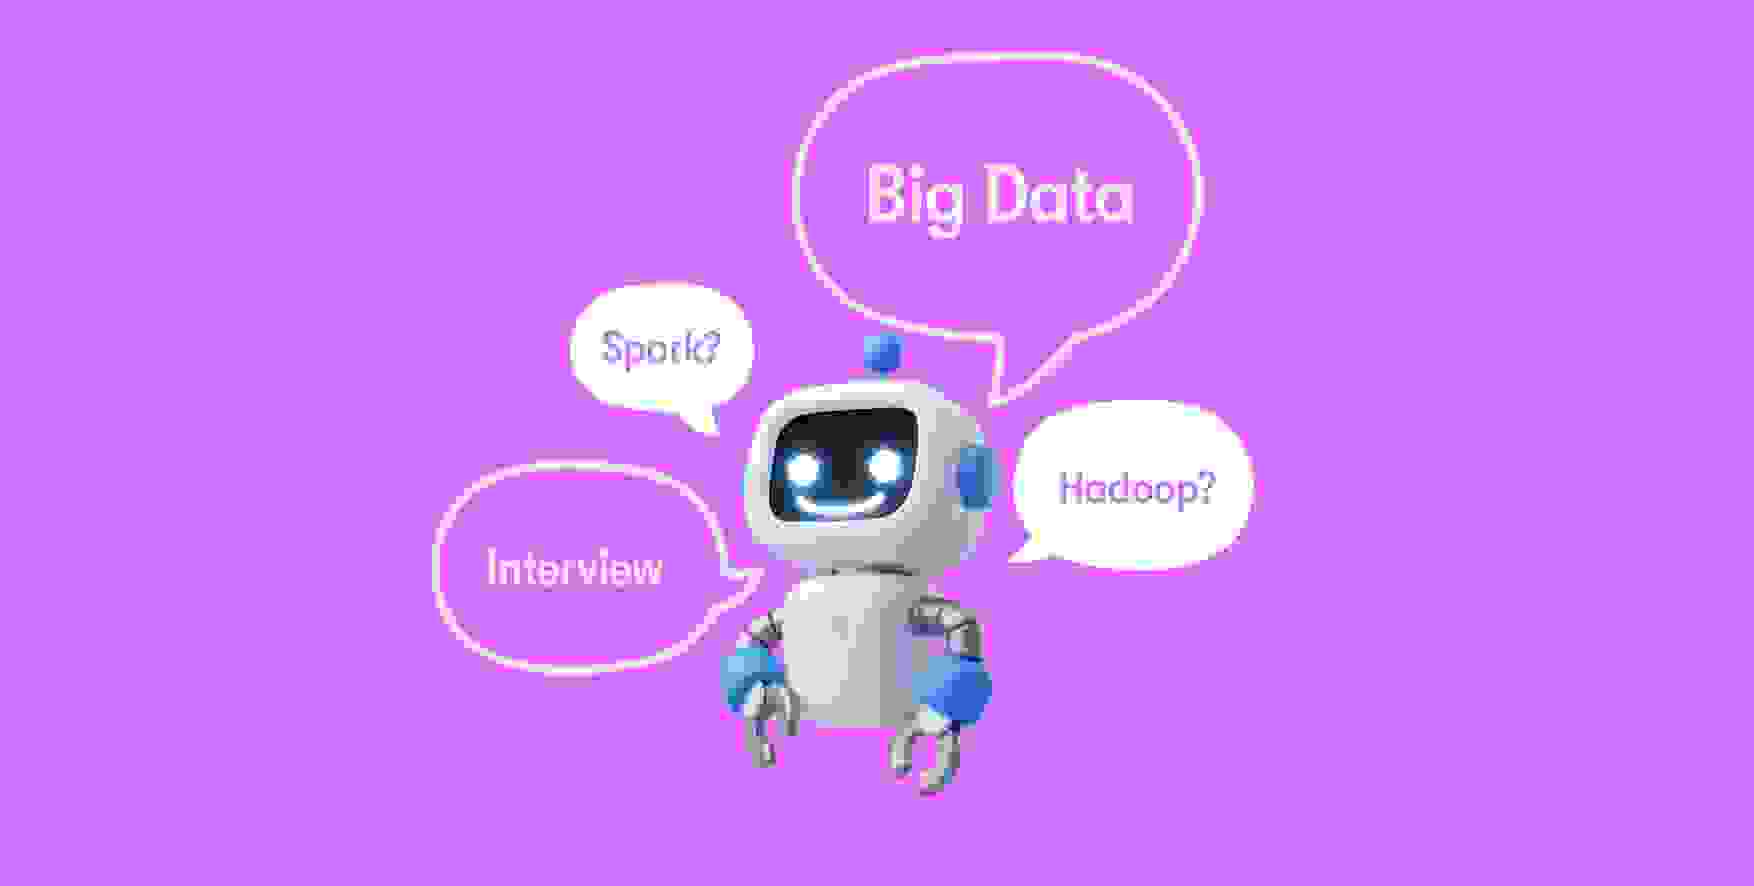 speech bubbles with words interview, big data, Hadoop, Spark, around the robot